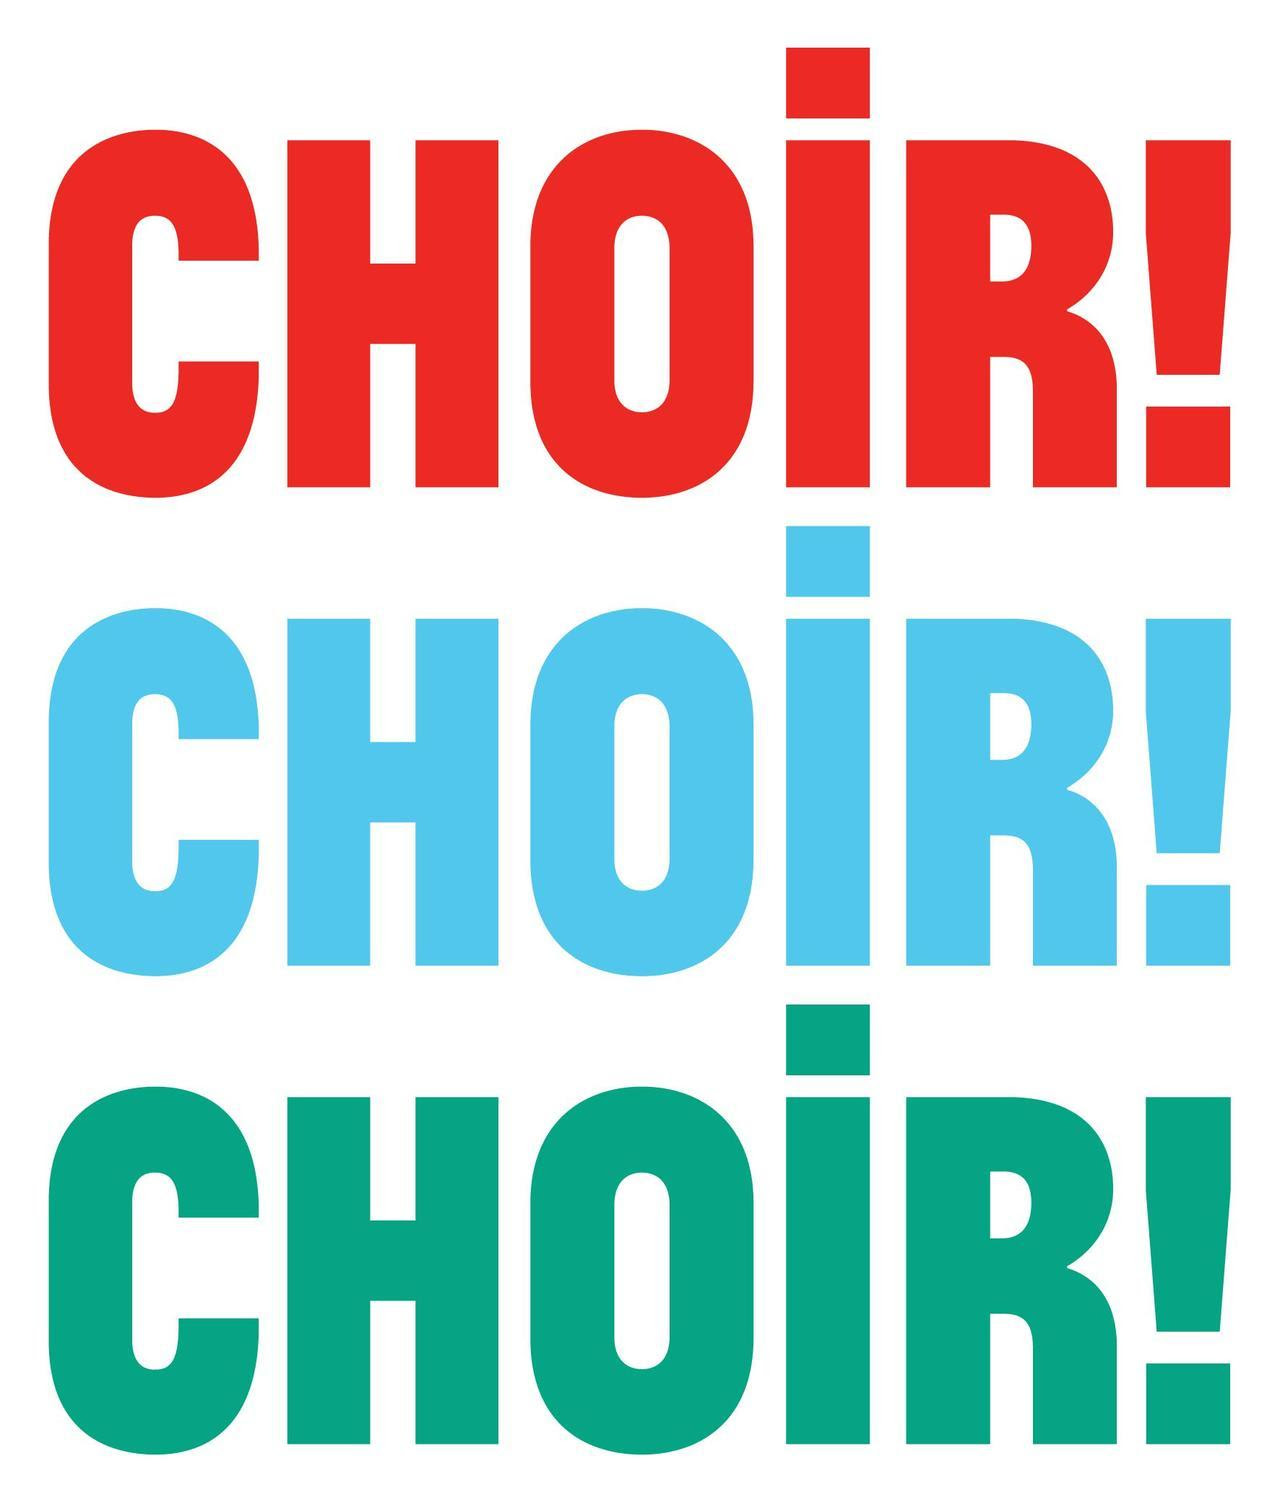 Choir! Choir! Choir! logo provided by Kleinhans Music Hall